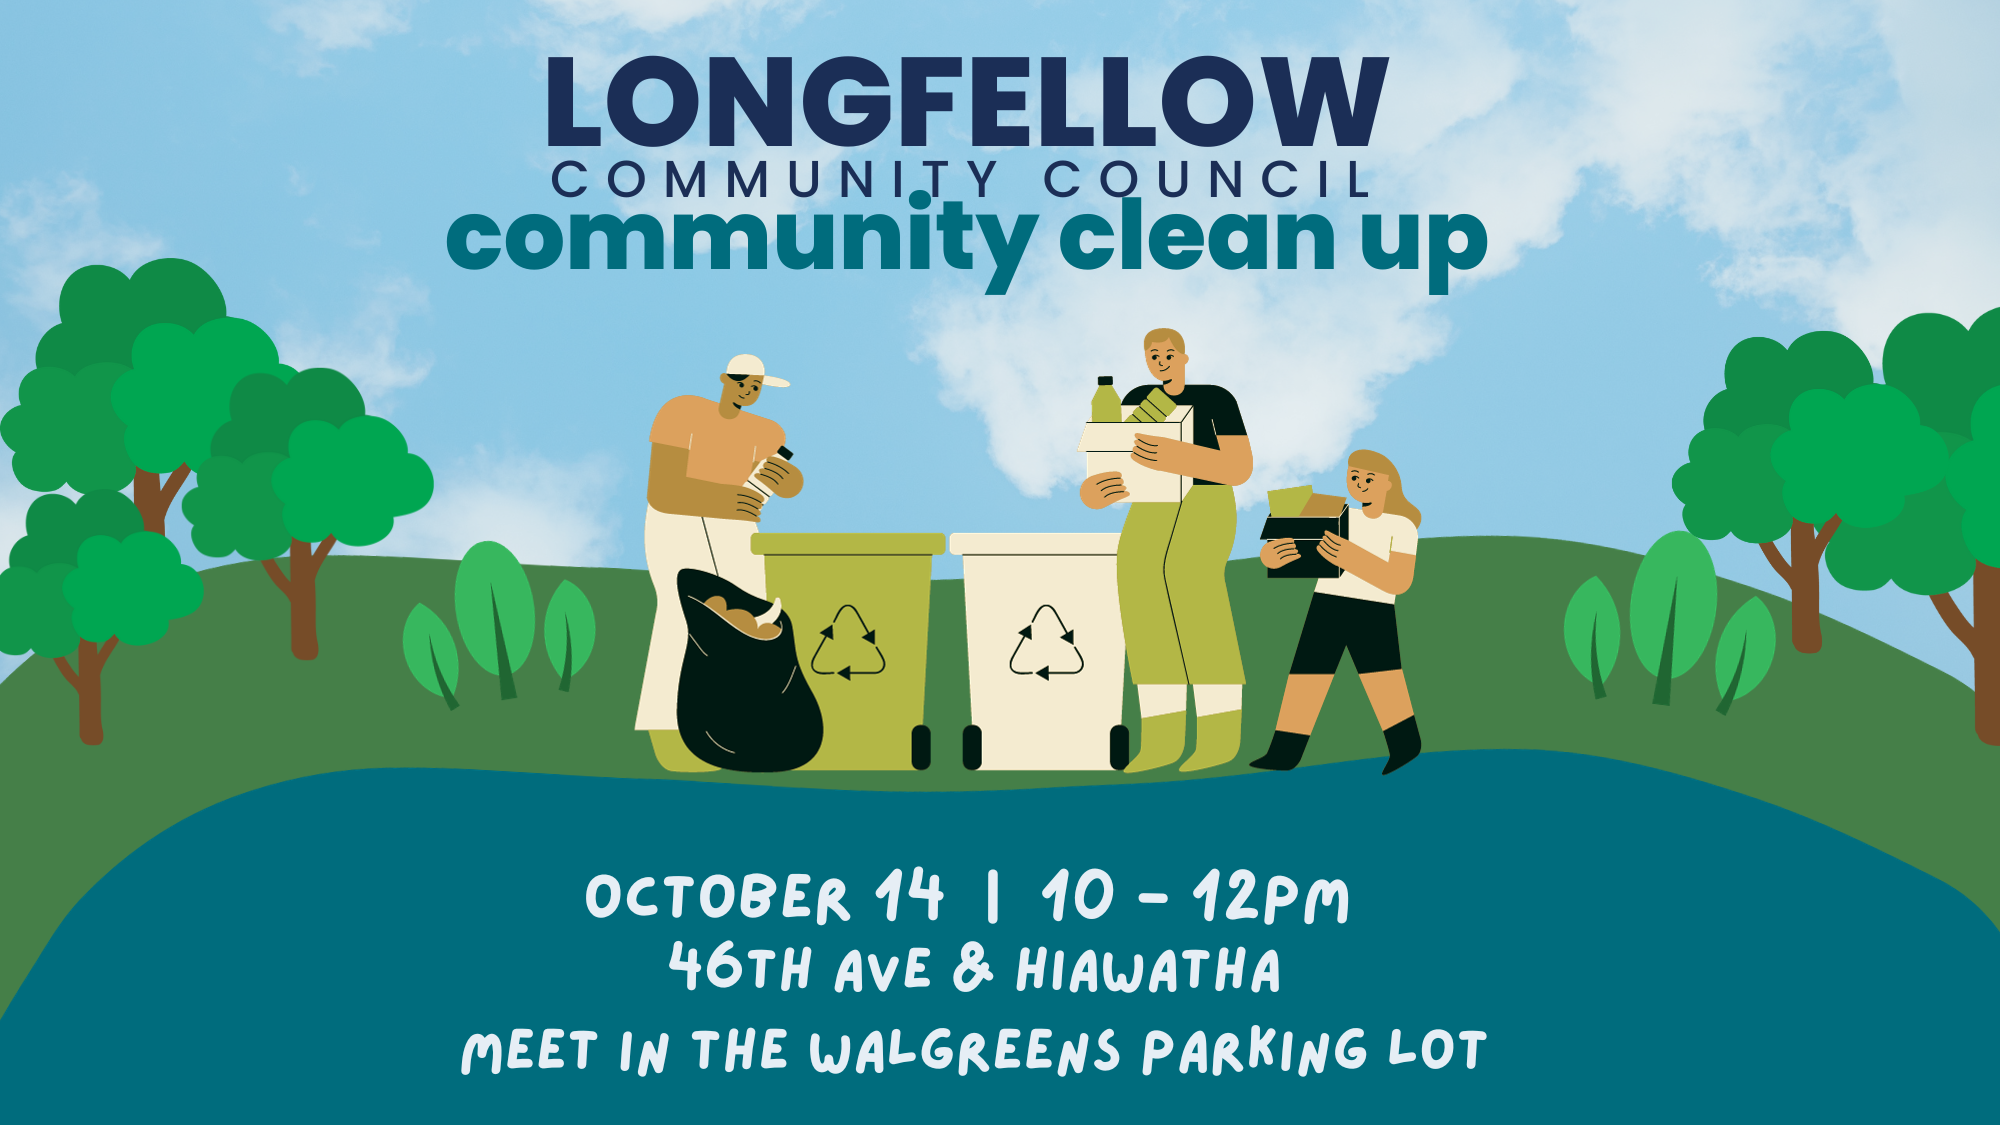 Community Clean Up - Longfellow Community Council